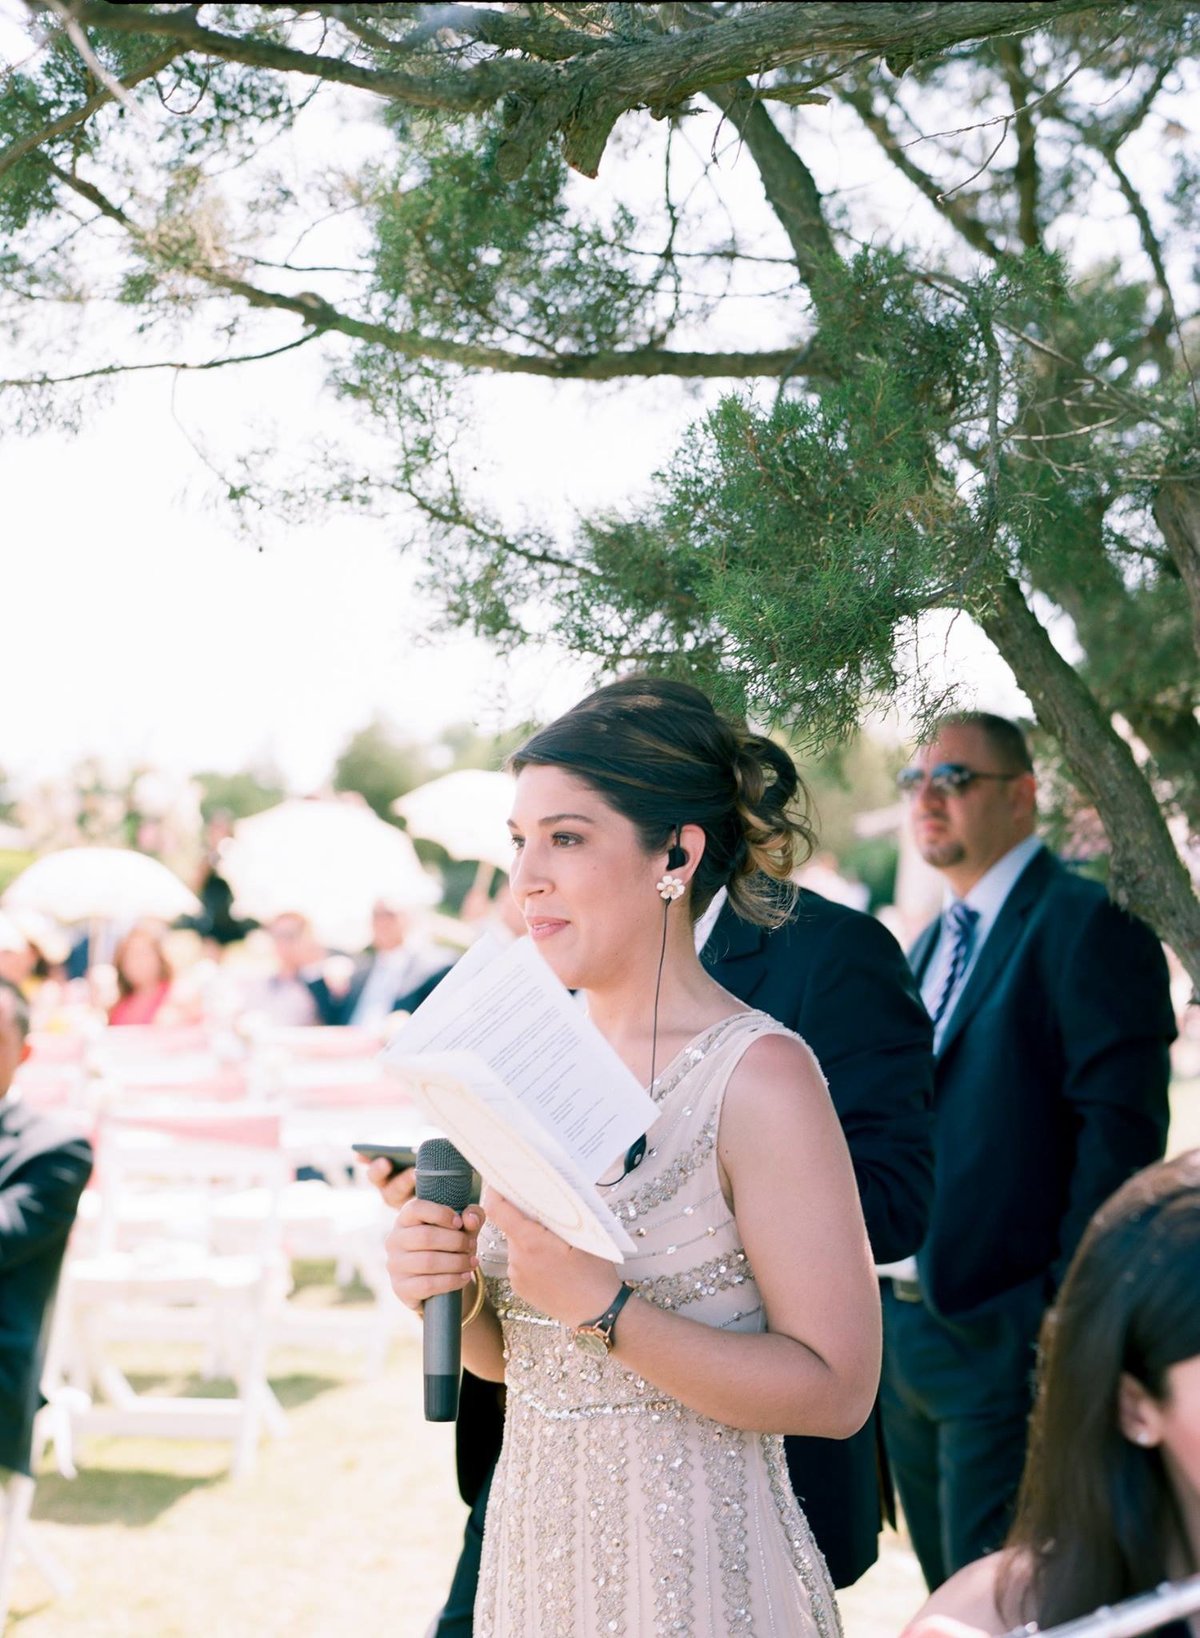 Luxury Destination Wedding Planner in Sardinia, Italy Elisa Mocci events